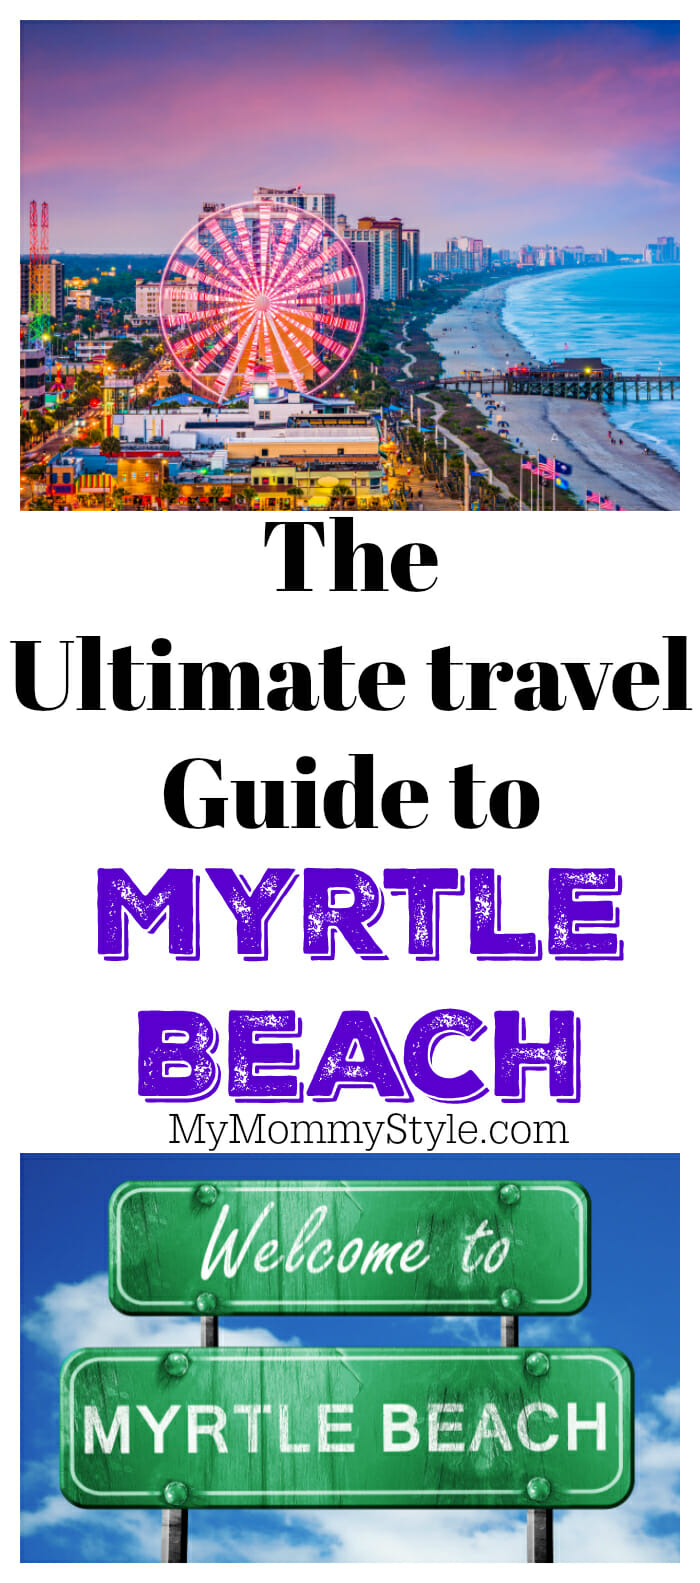 myrtle beach, travel guide to myrtle beach